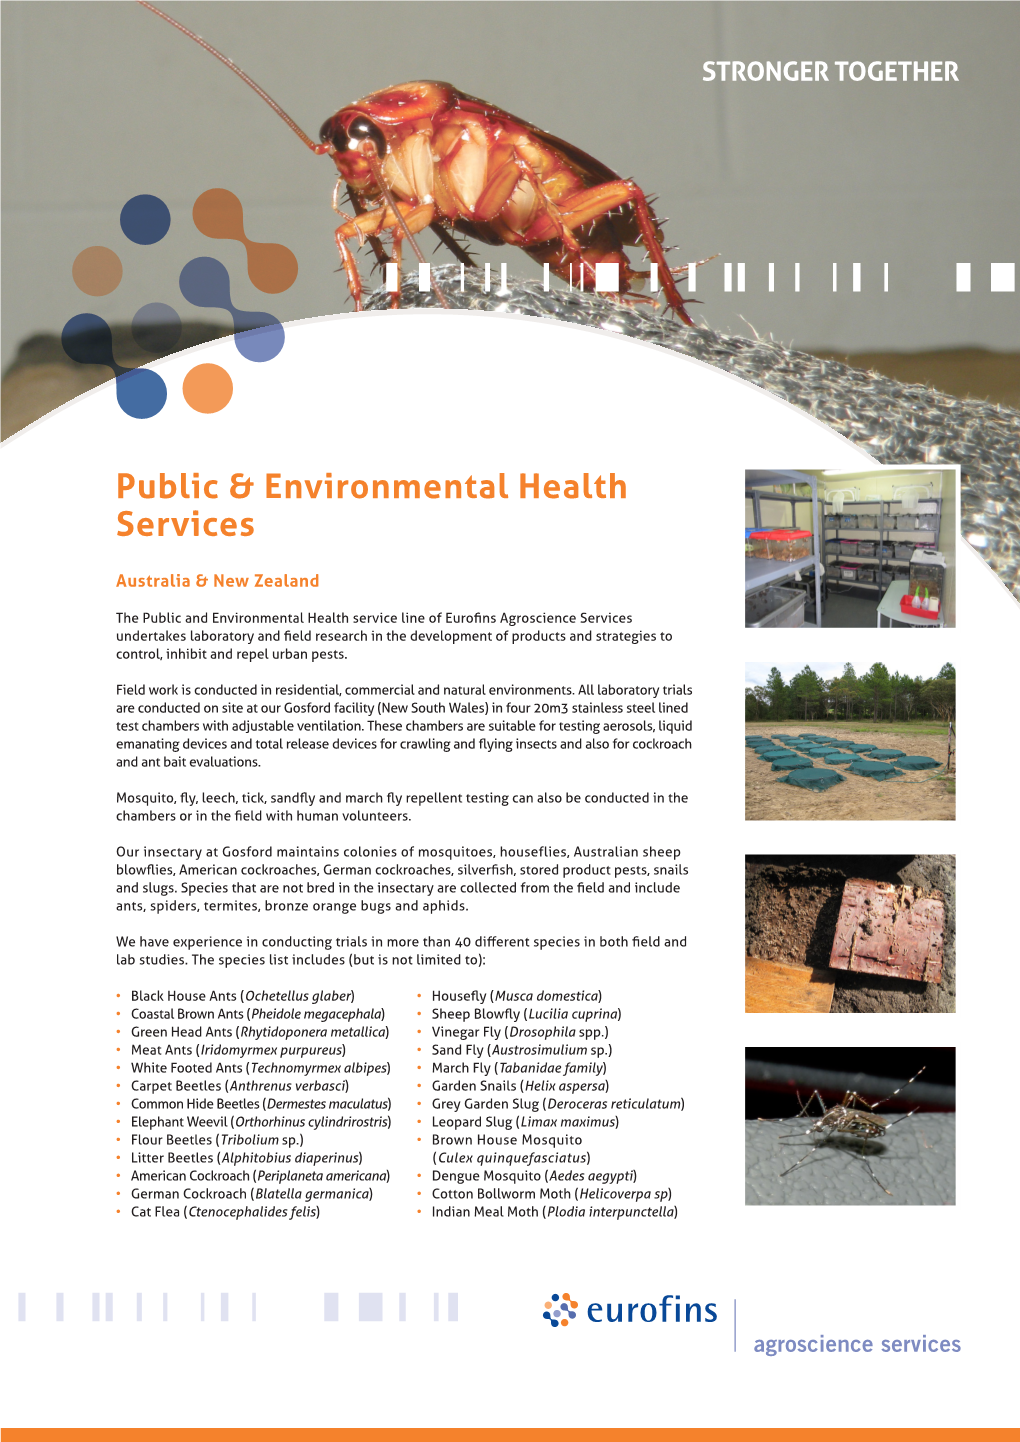 Public & Environmental Health Services